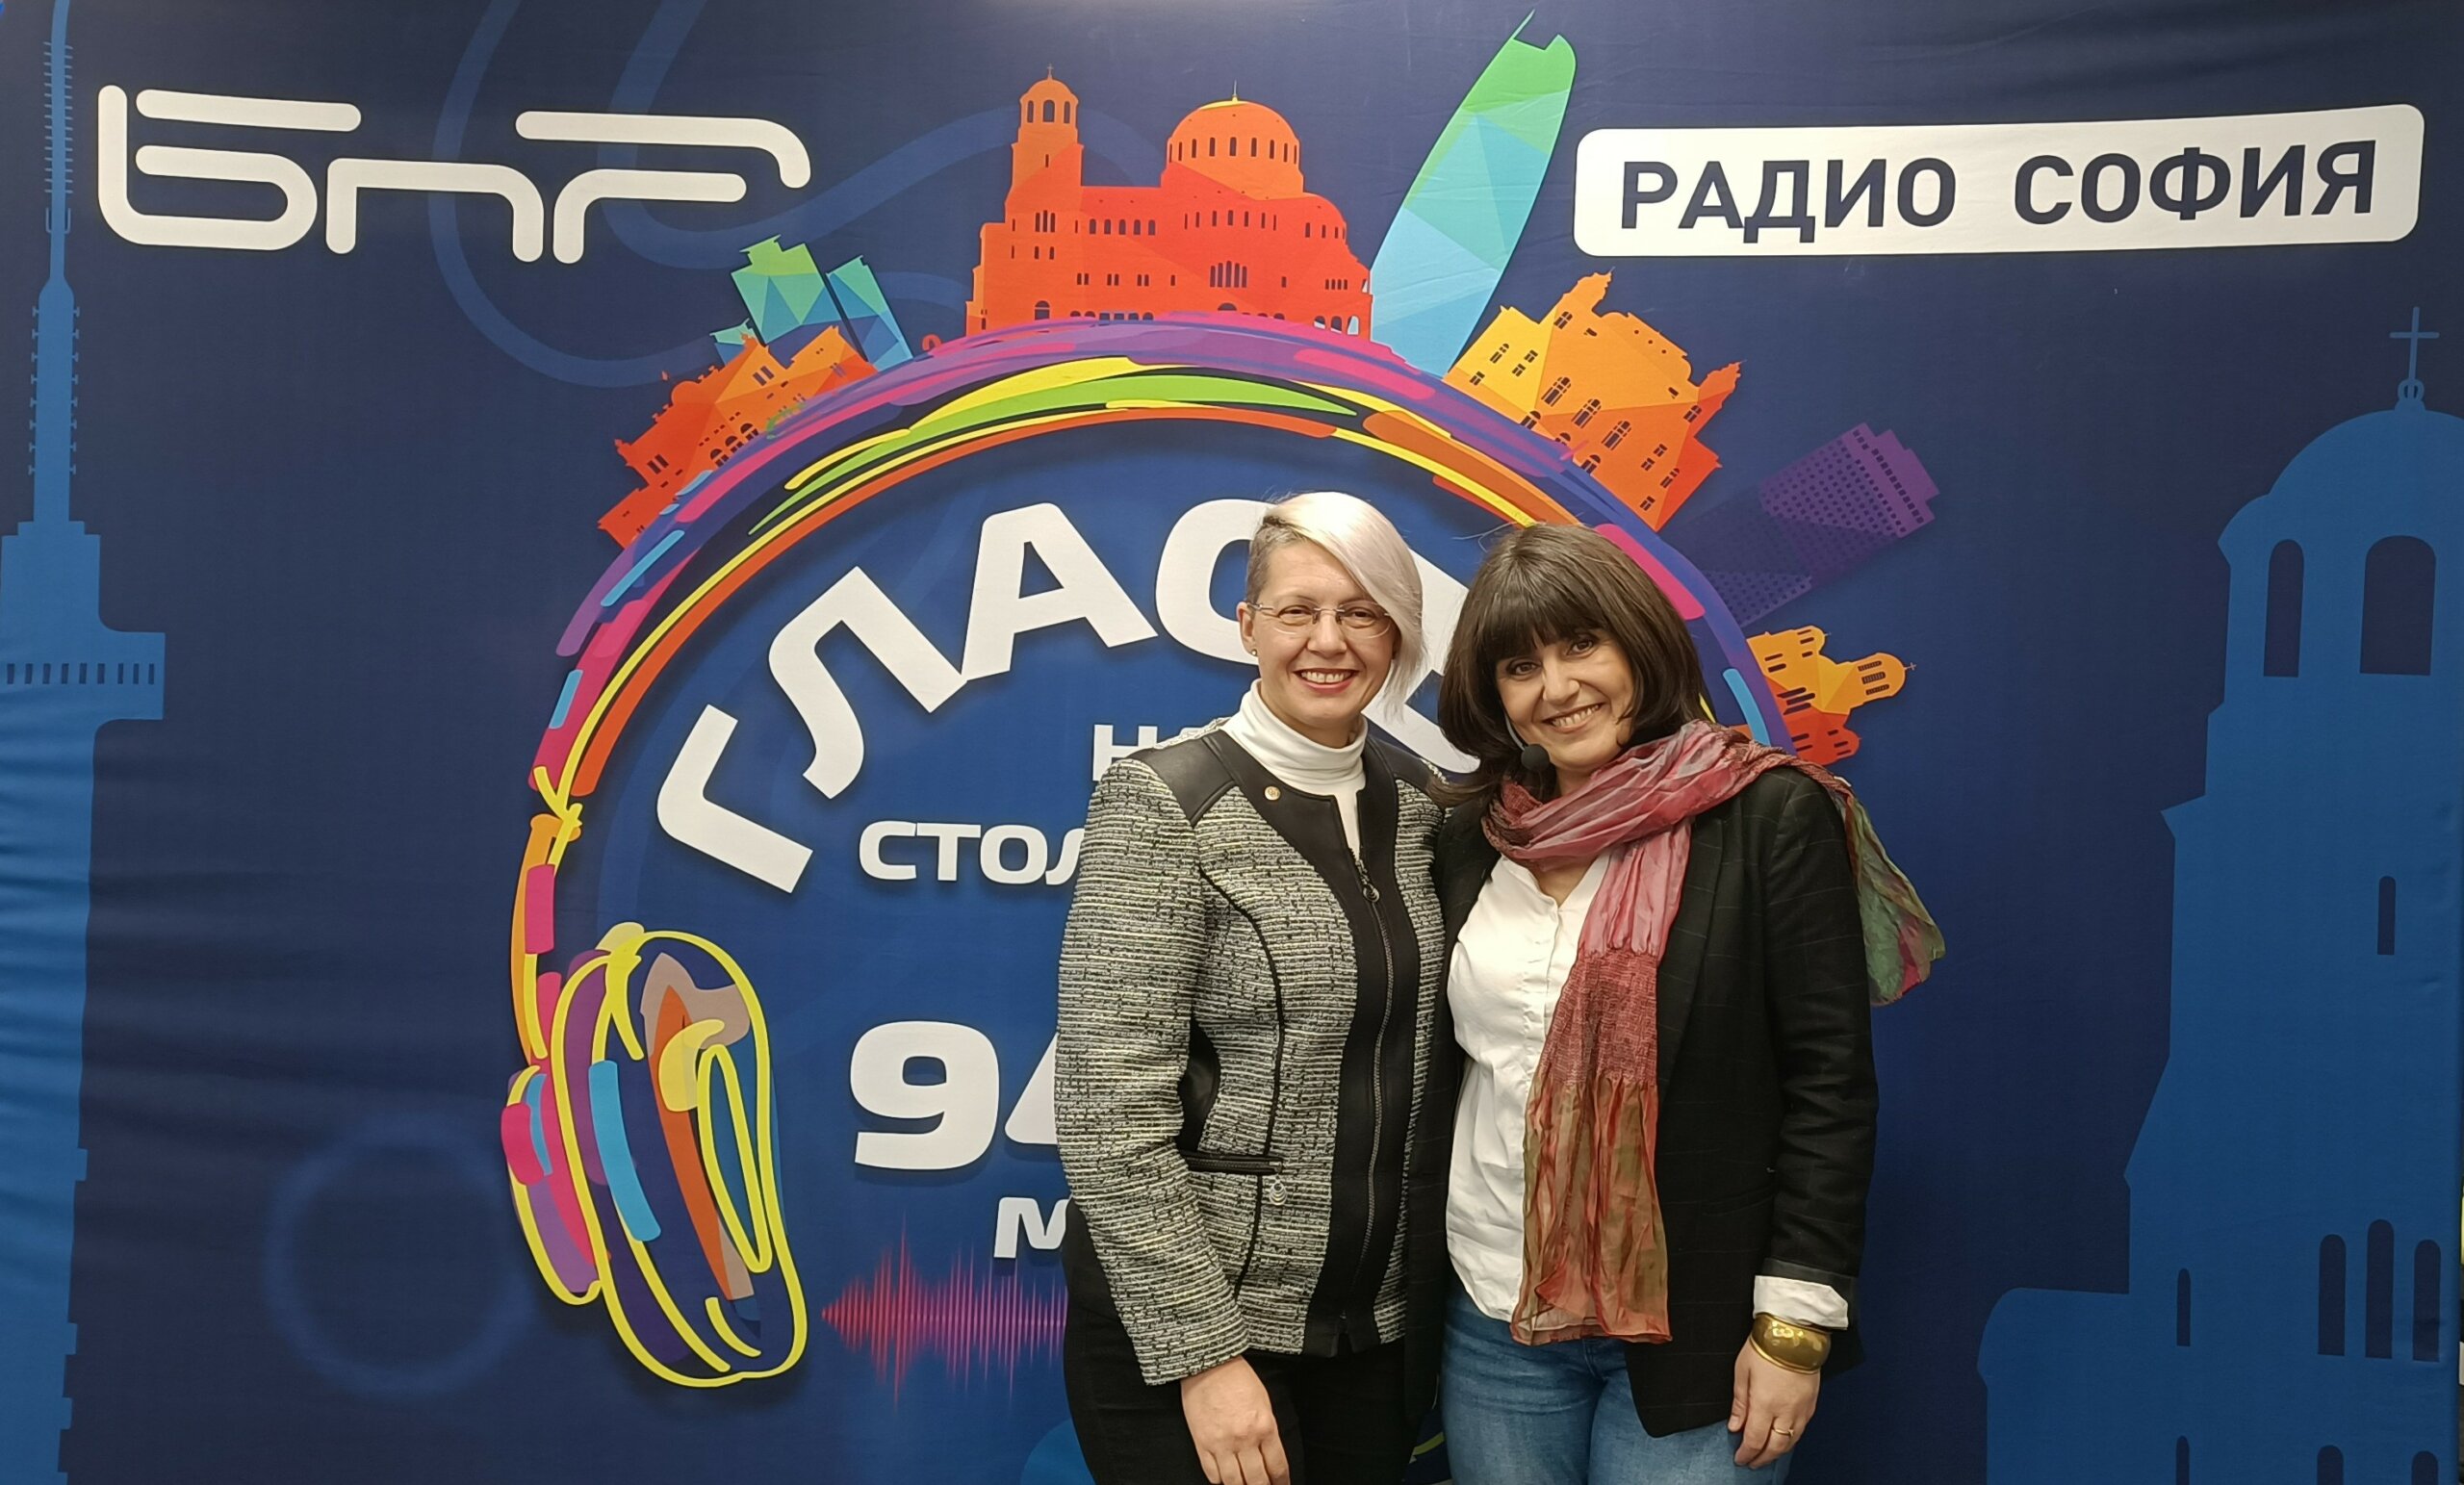 Radio Sofia with Lili Goleminova